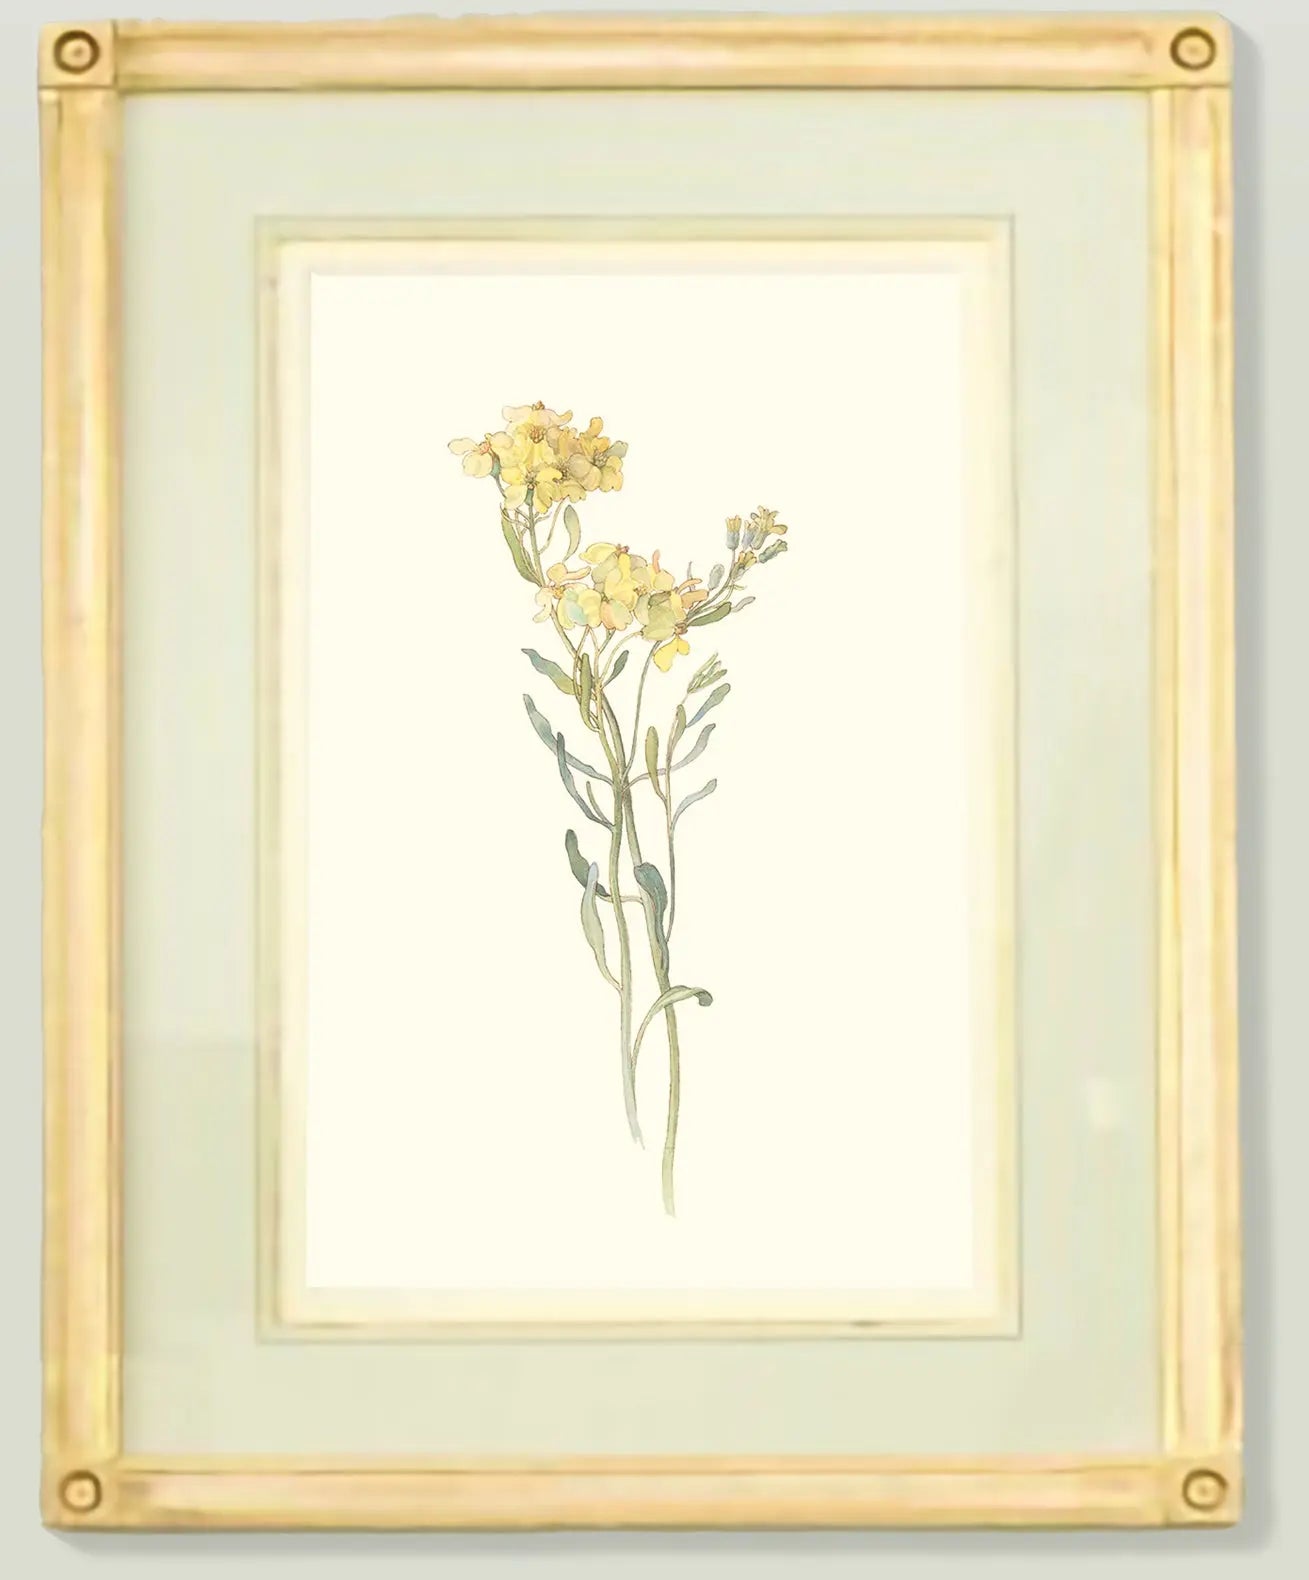 Naturalist Watercolor Illustrations: Wildflower Botanicals, Vol. I